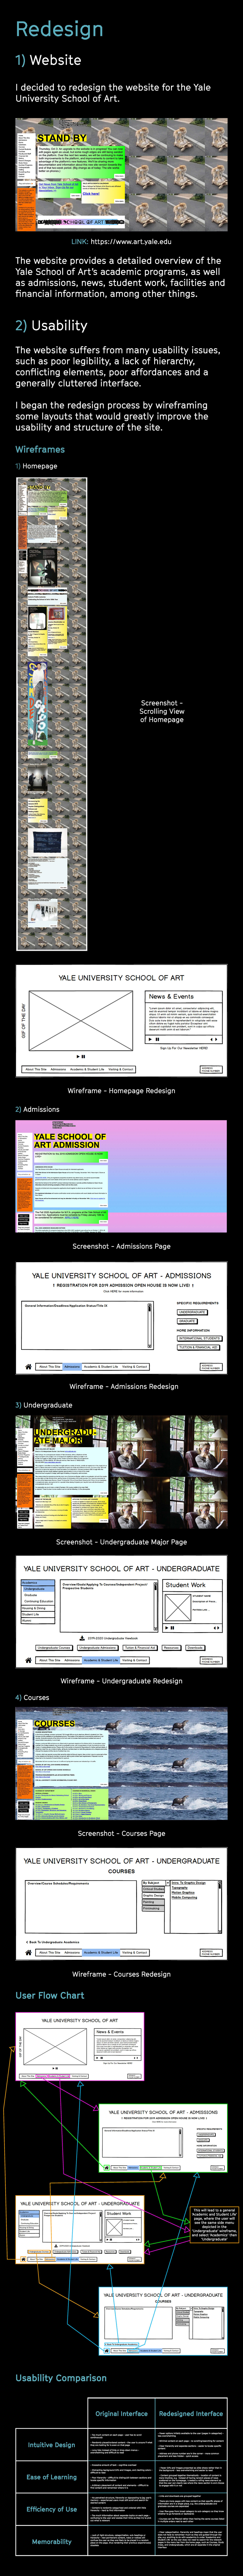 redesign UI/UX Web Design  yale